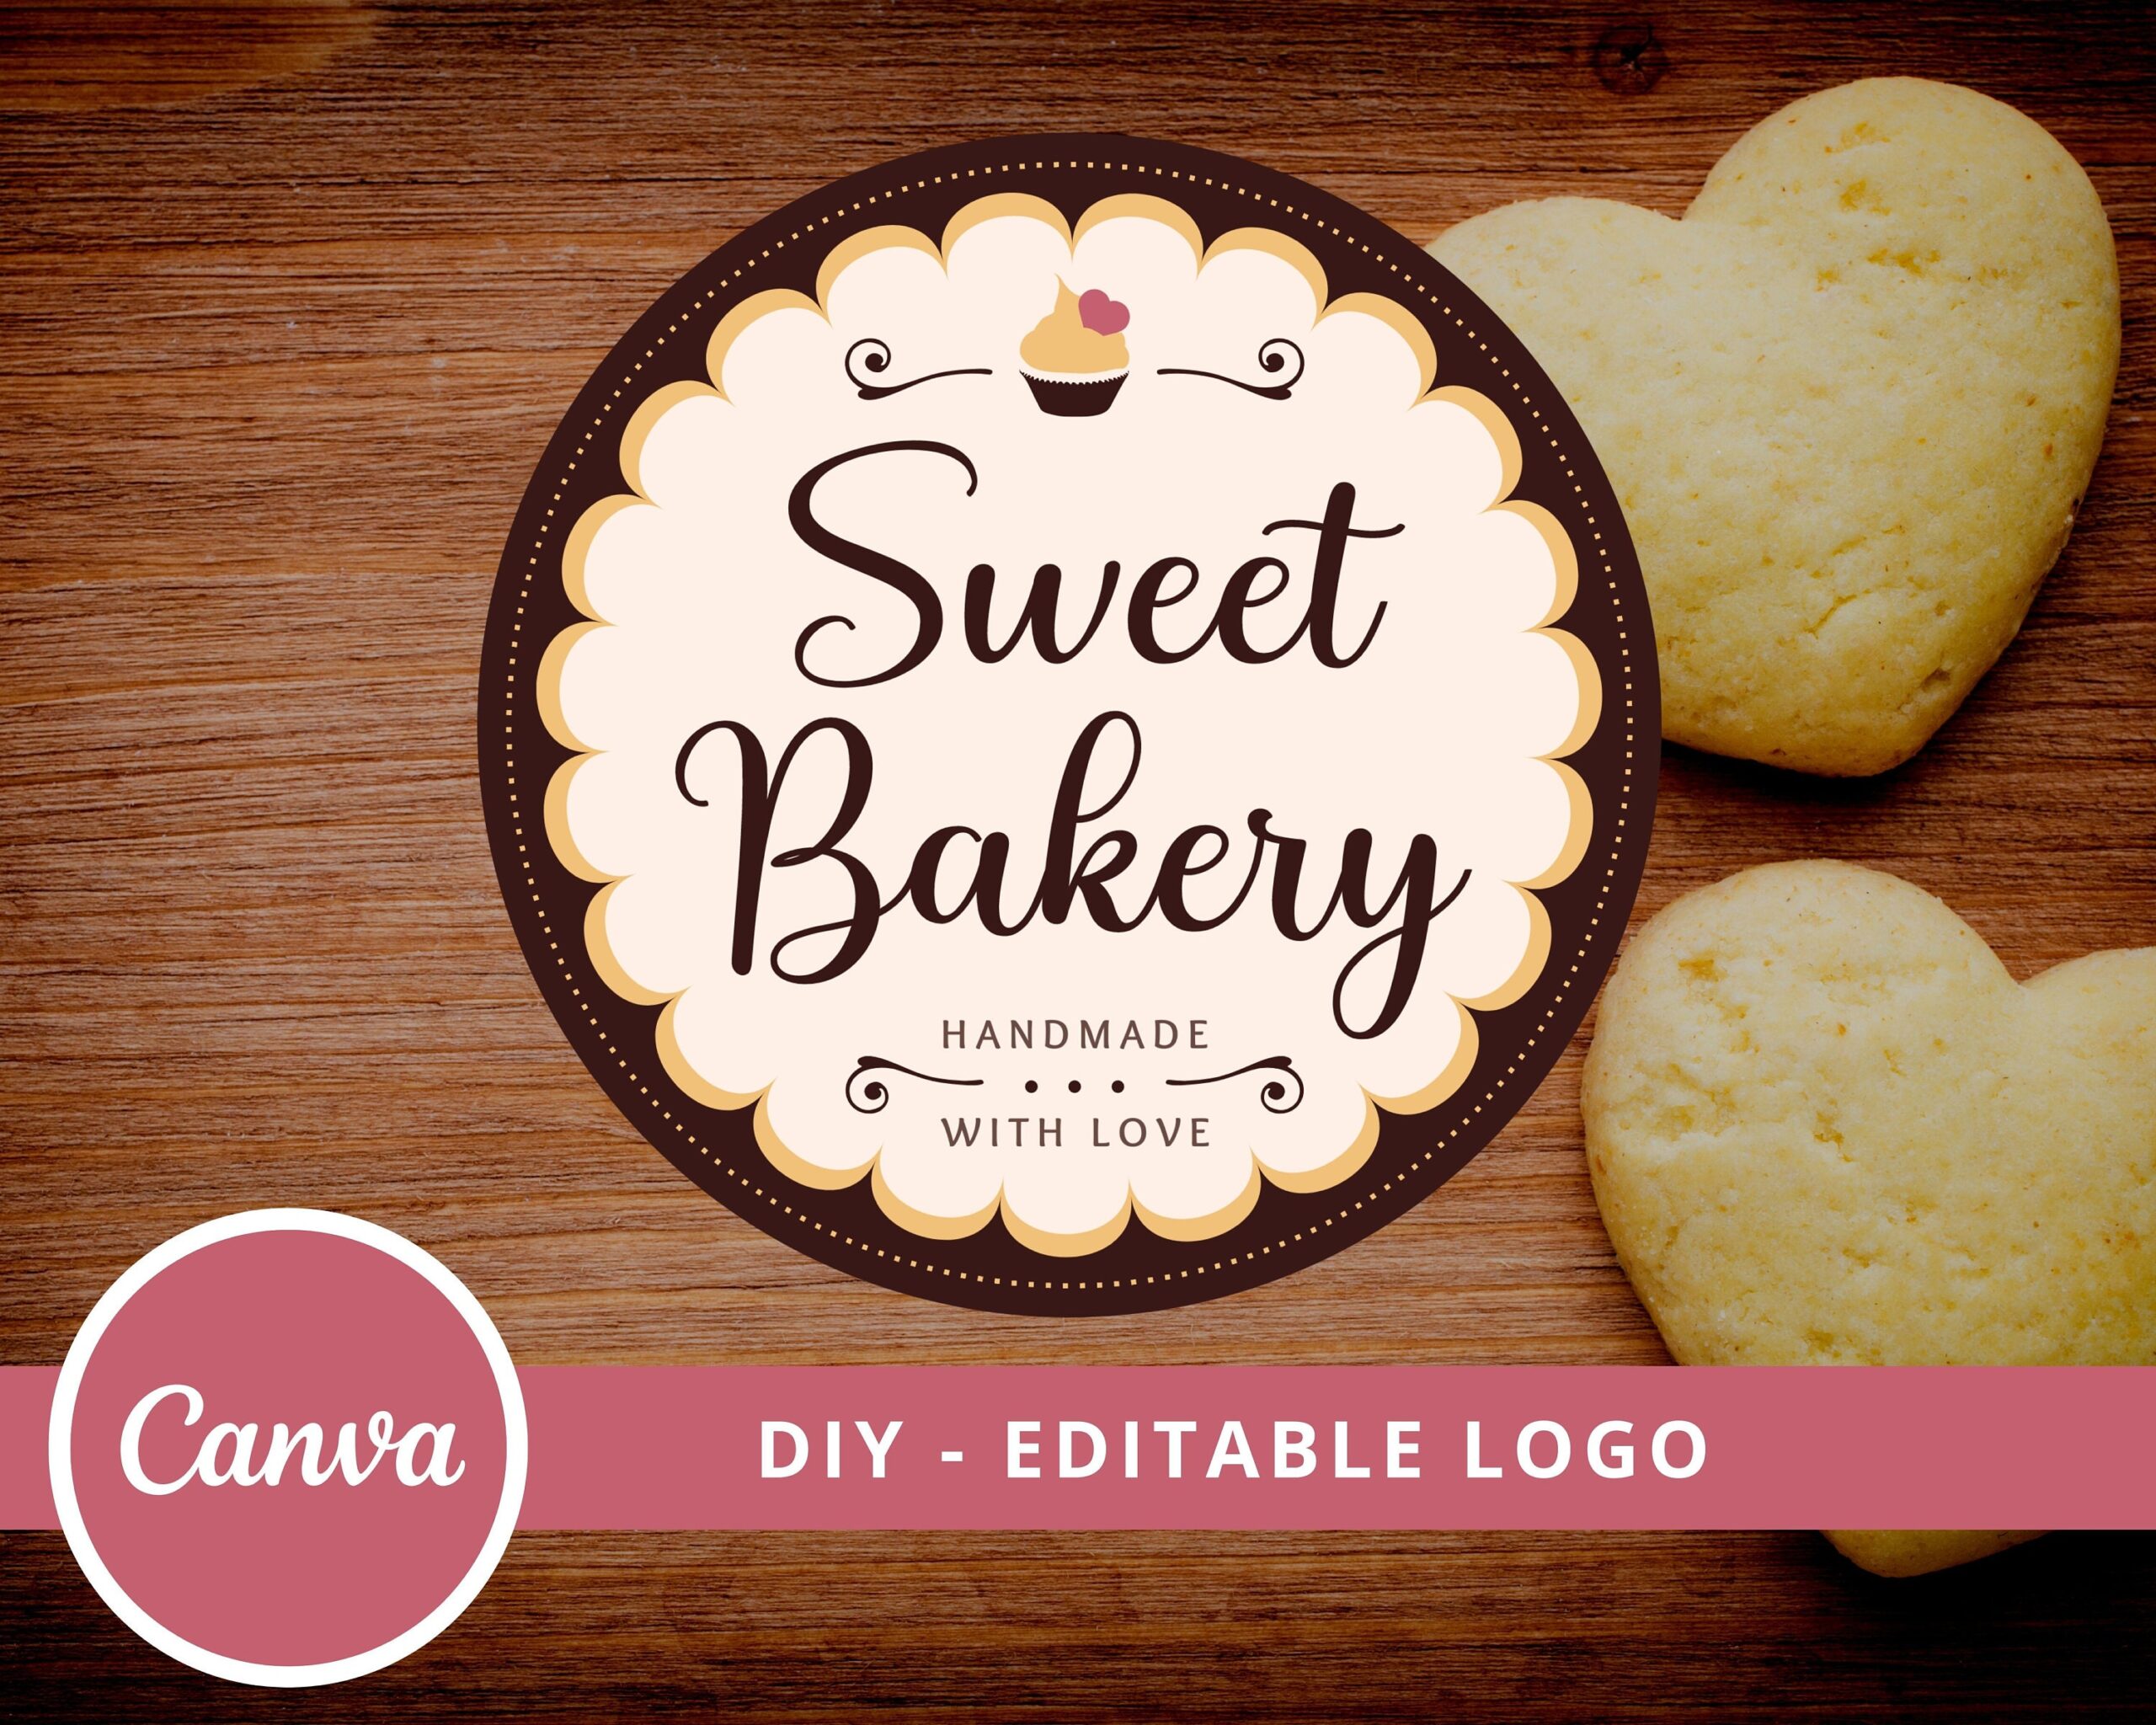 DIY Logo Design Template - Bakery Logo, Cupcake Logos - Edit Yourself Canva Logo Template. Cakery Logo Maker, Cake Logo - Instant Access